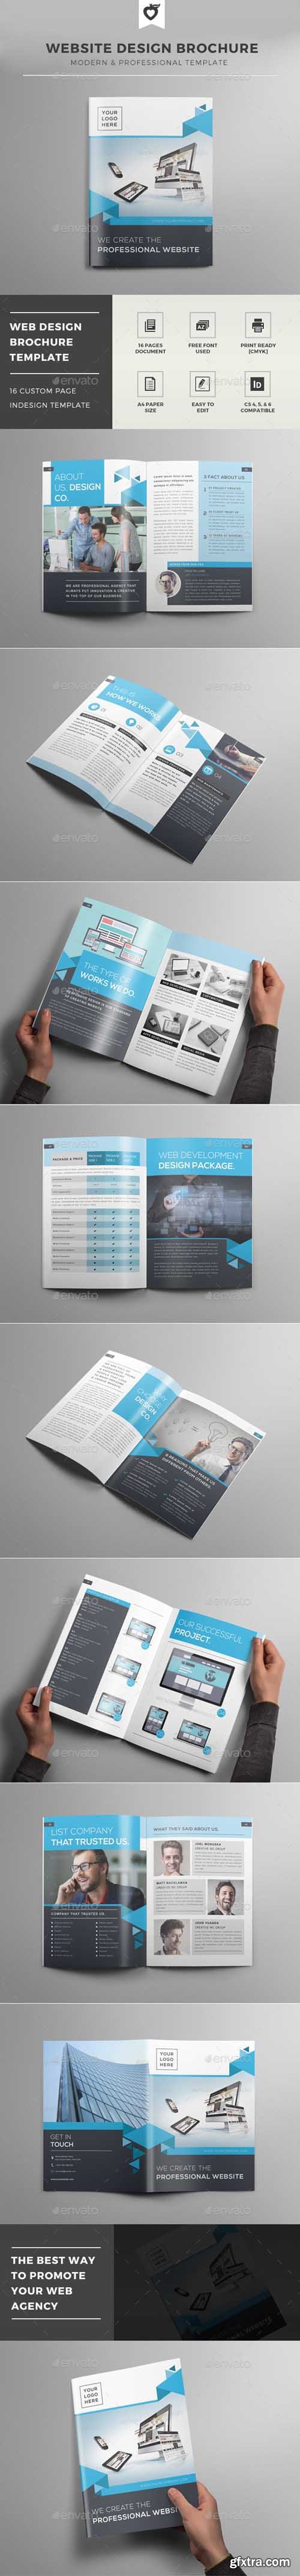 GR - Website Design Brochure Template 12502679